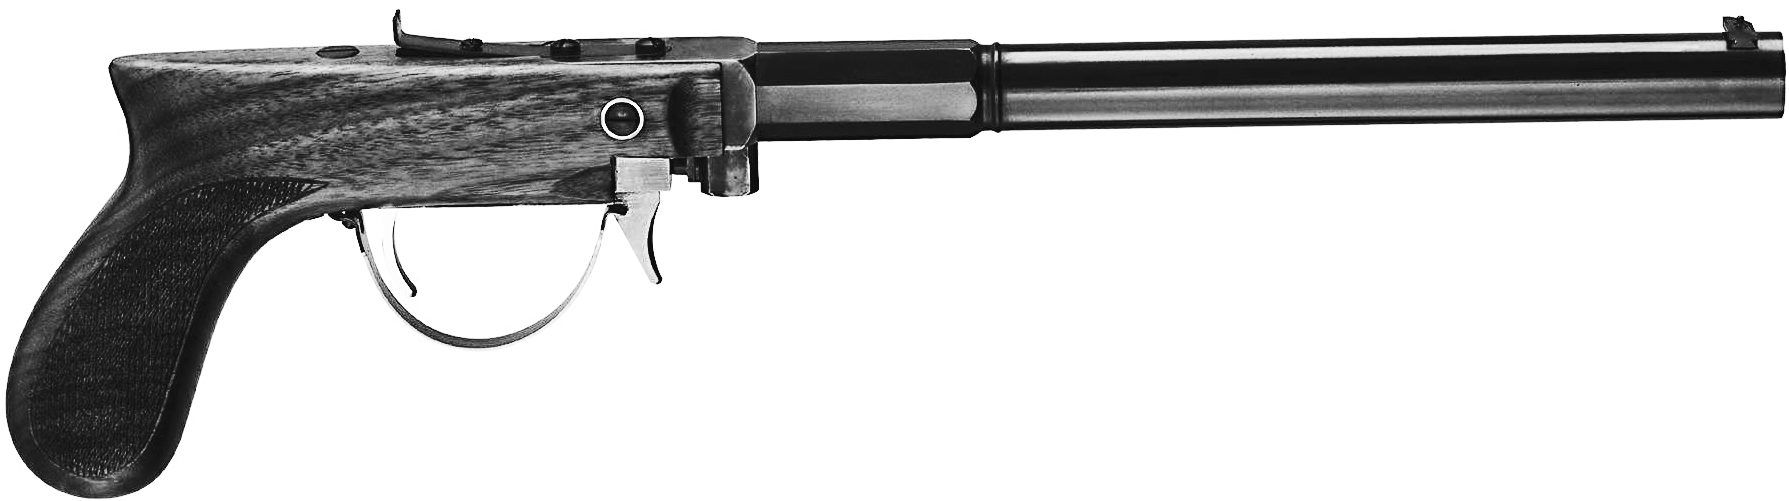 Carleton Underhammer Pistol